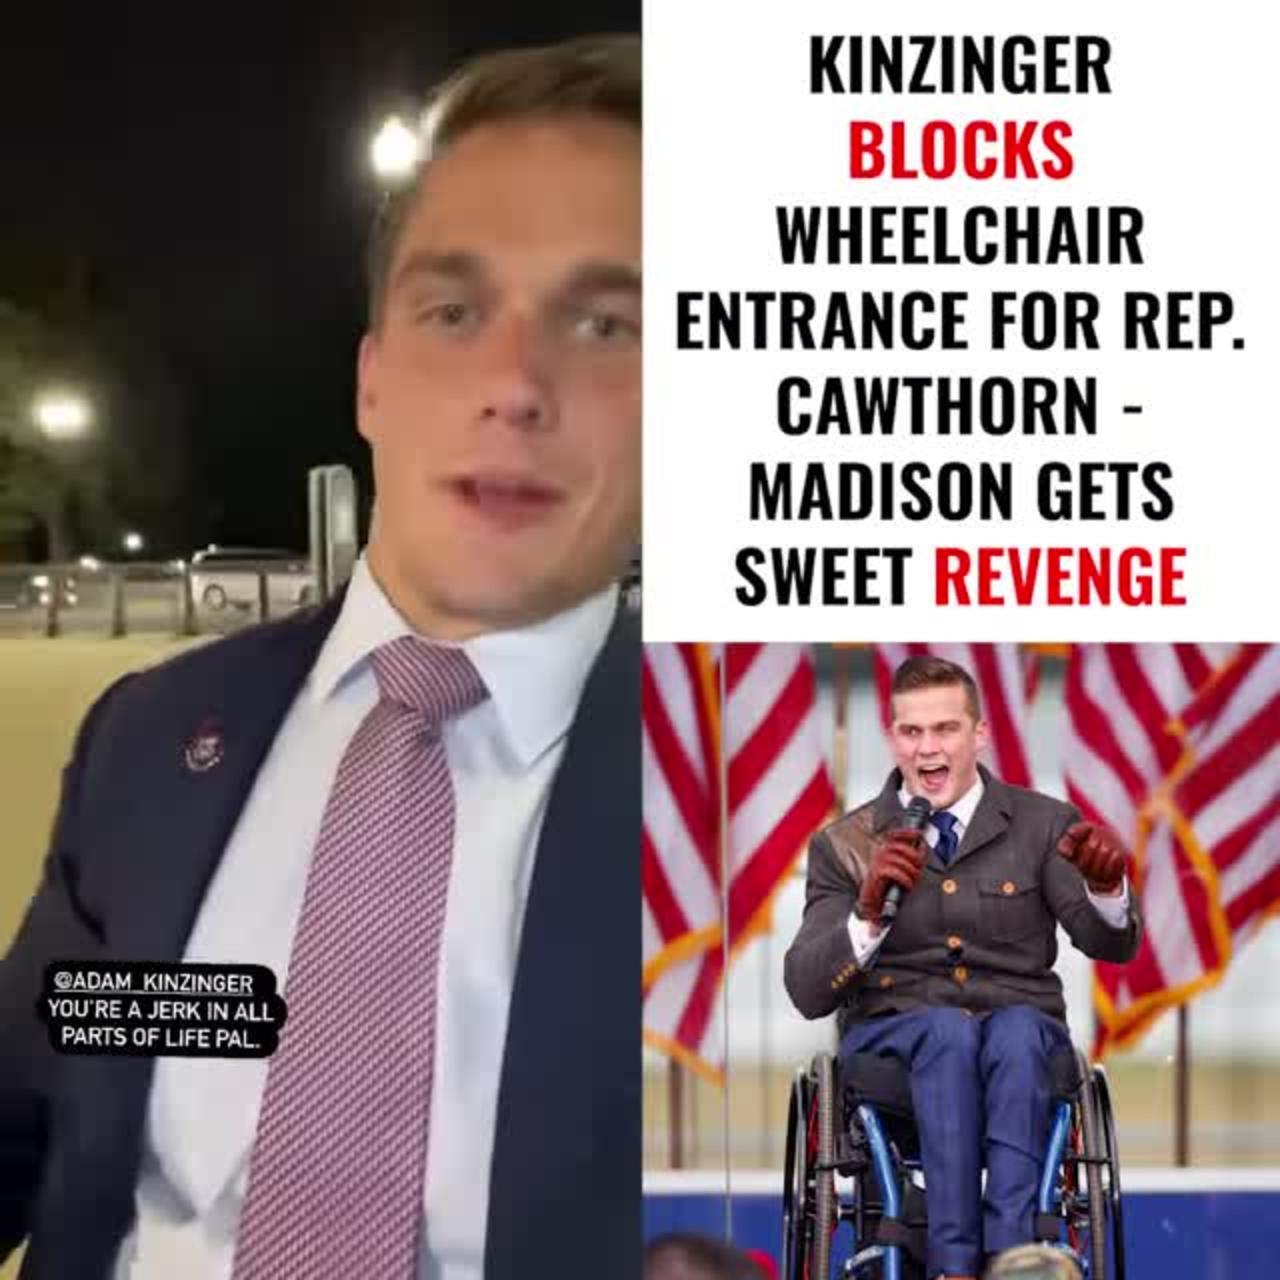 Kinzinger Blocks Wheelchair Entrance for Rep. Cawthorn - Madison Cawthorn Gets Sweet